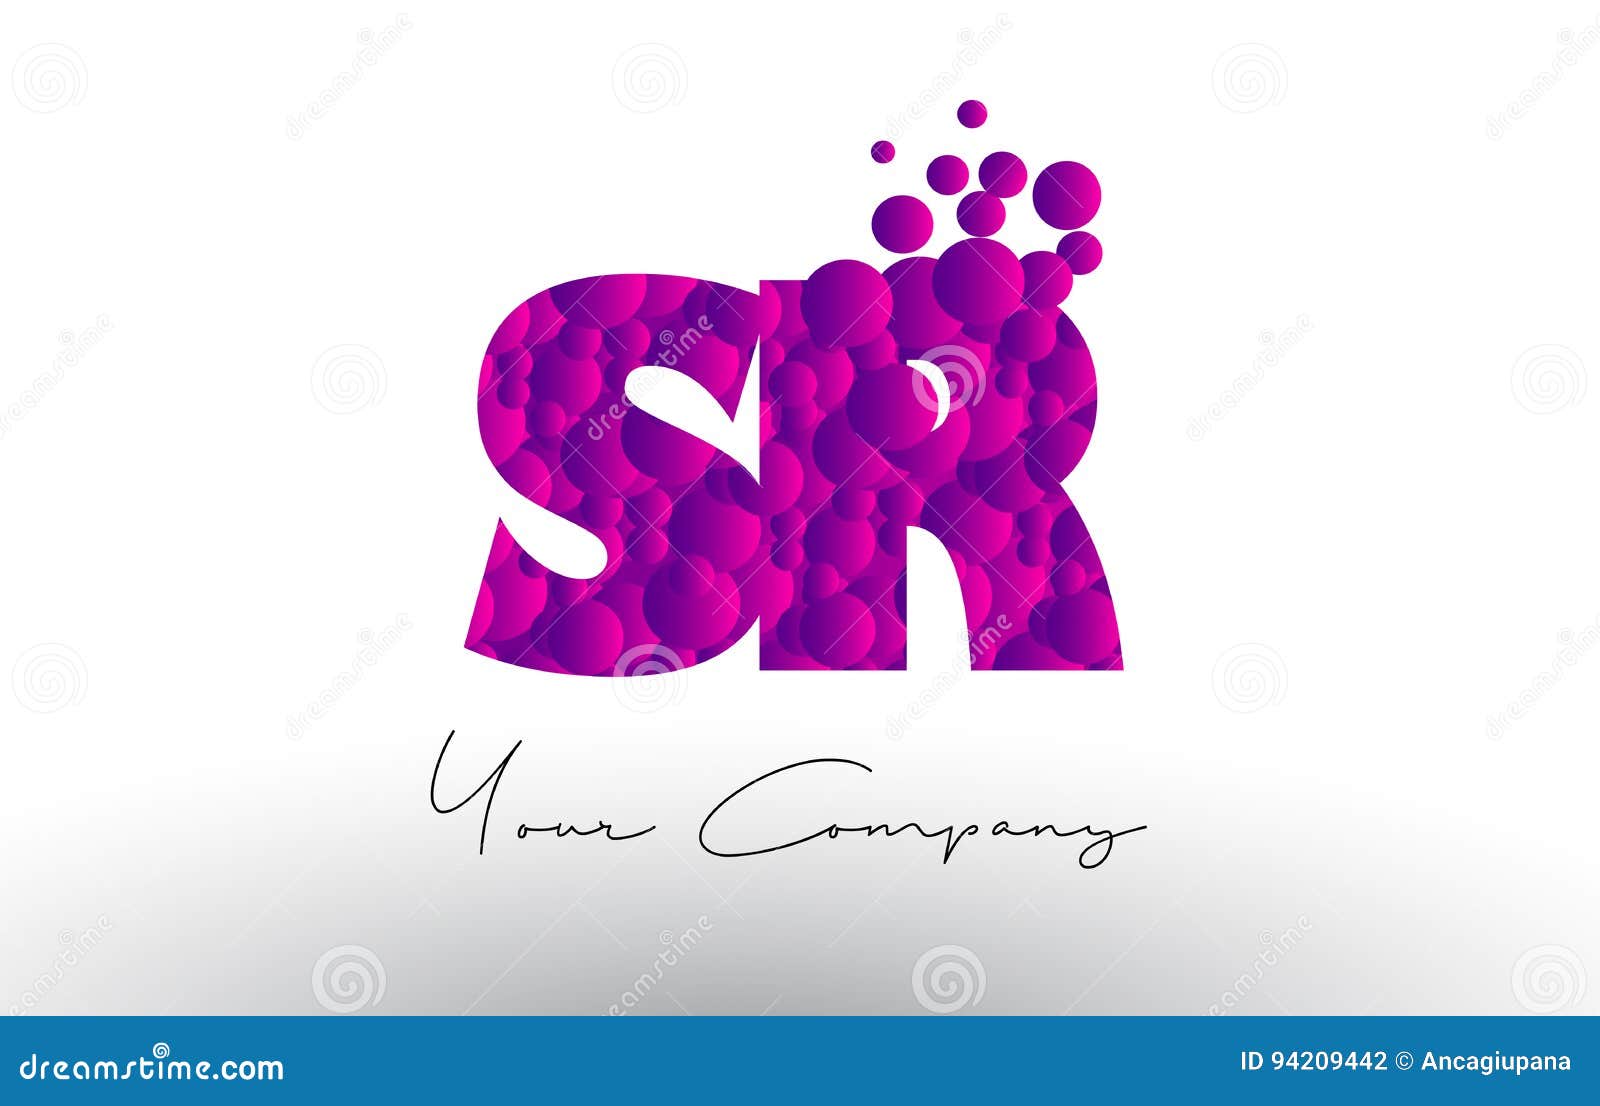 SR S R Dots Letter Logo with Purple Bubbles Texture. Stock Vector ...